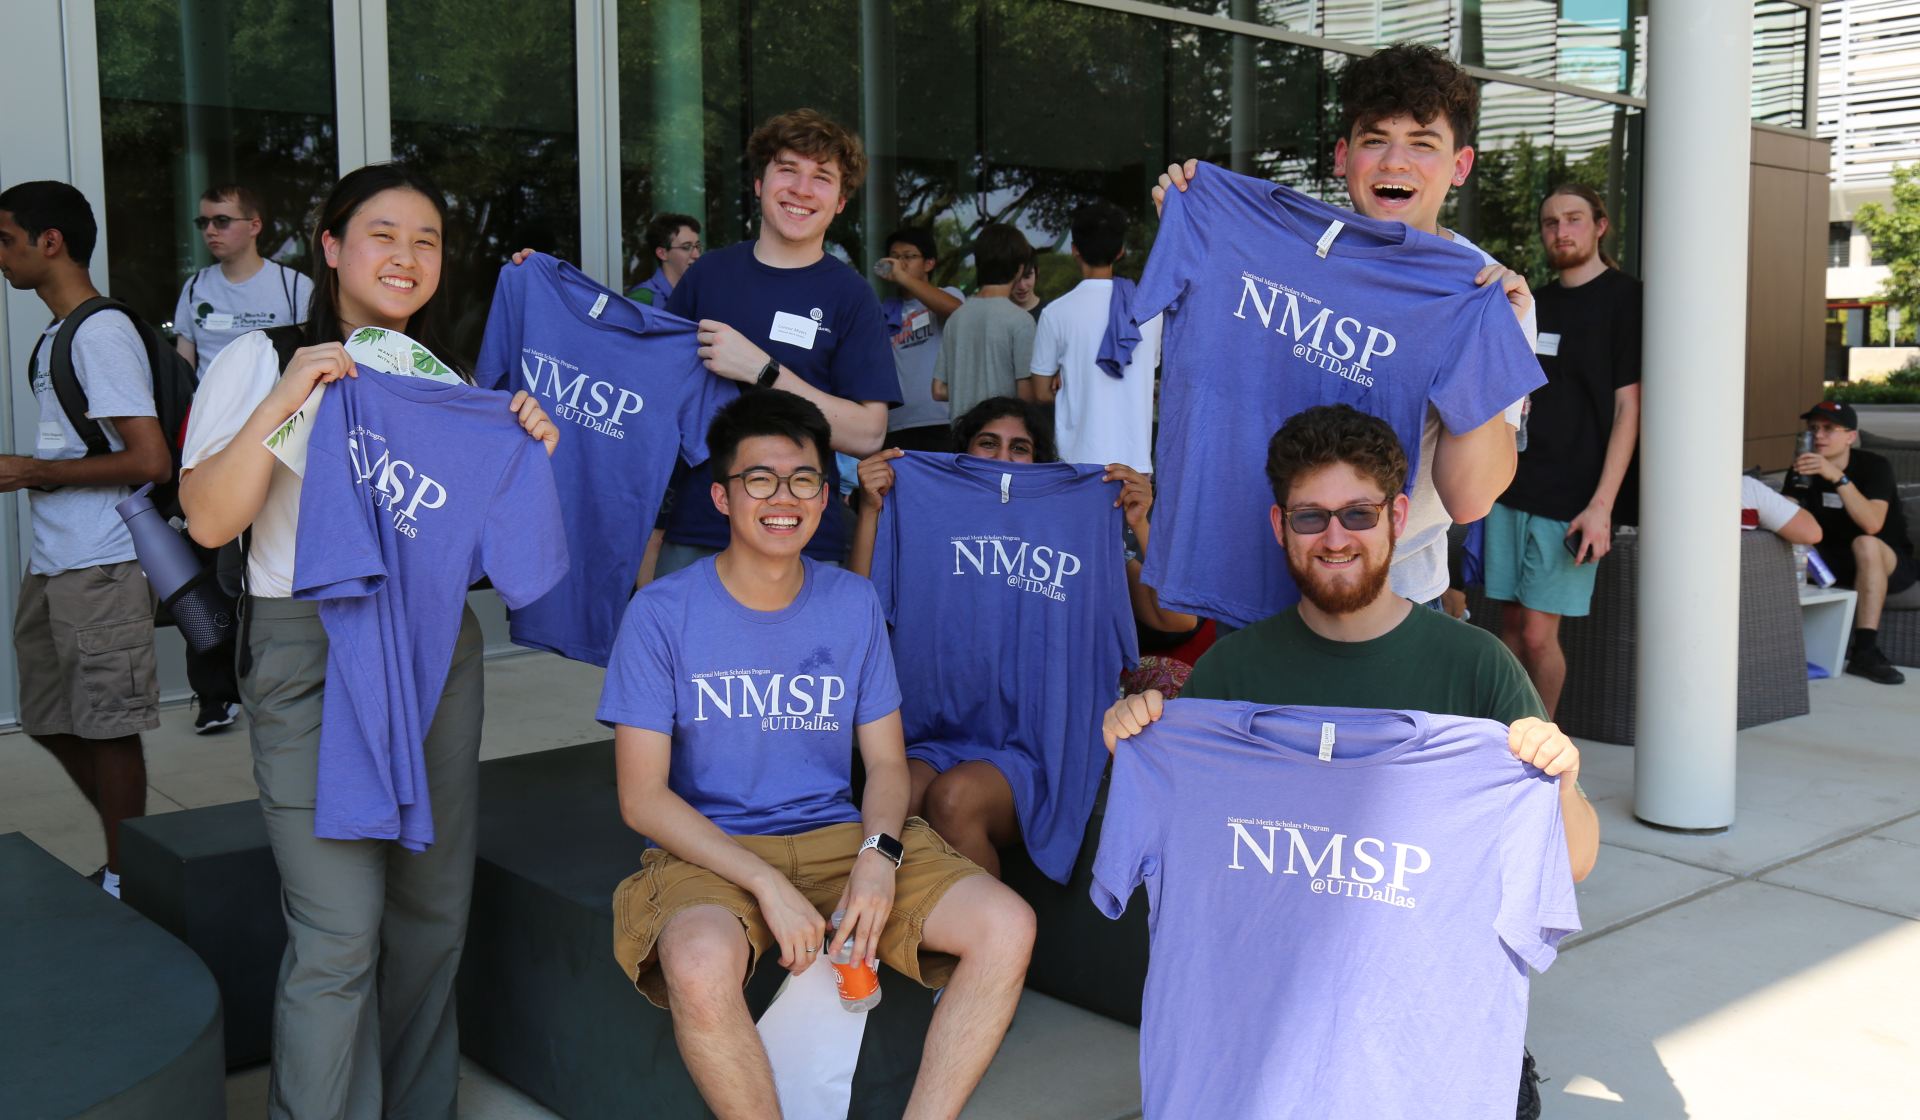 National Merit Scholars show off T-shirts